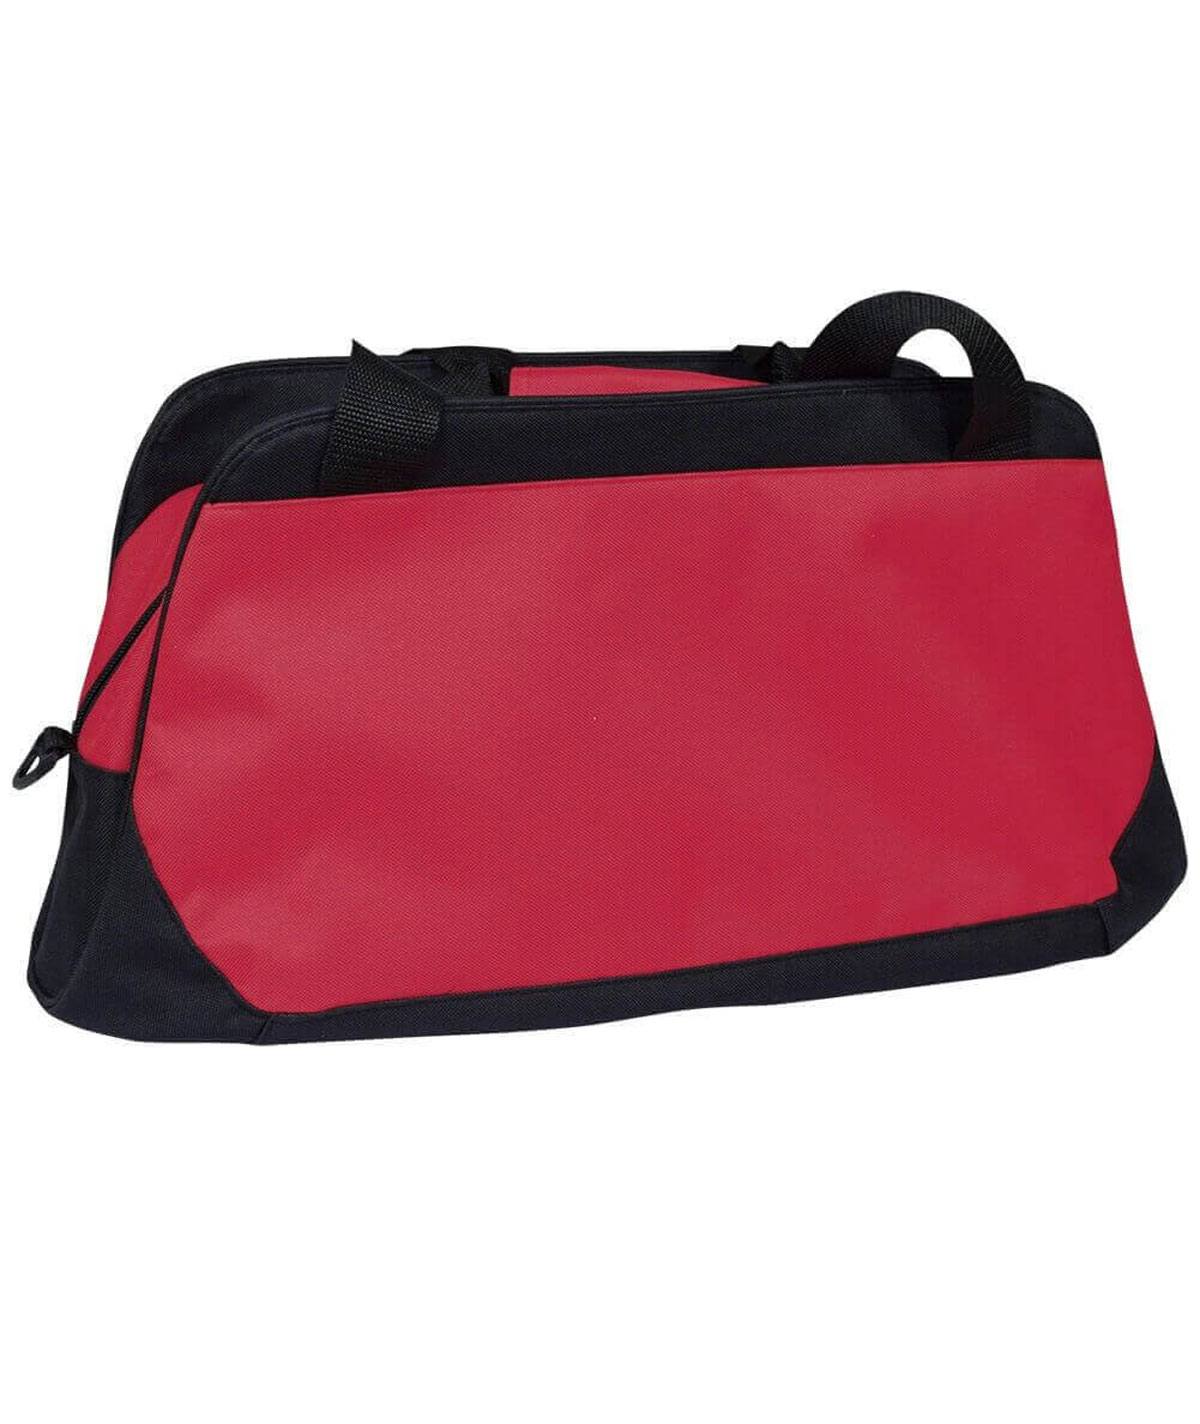 Chasse Micro Duffle Bag